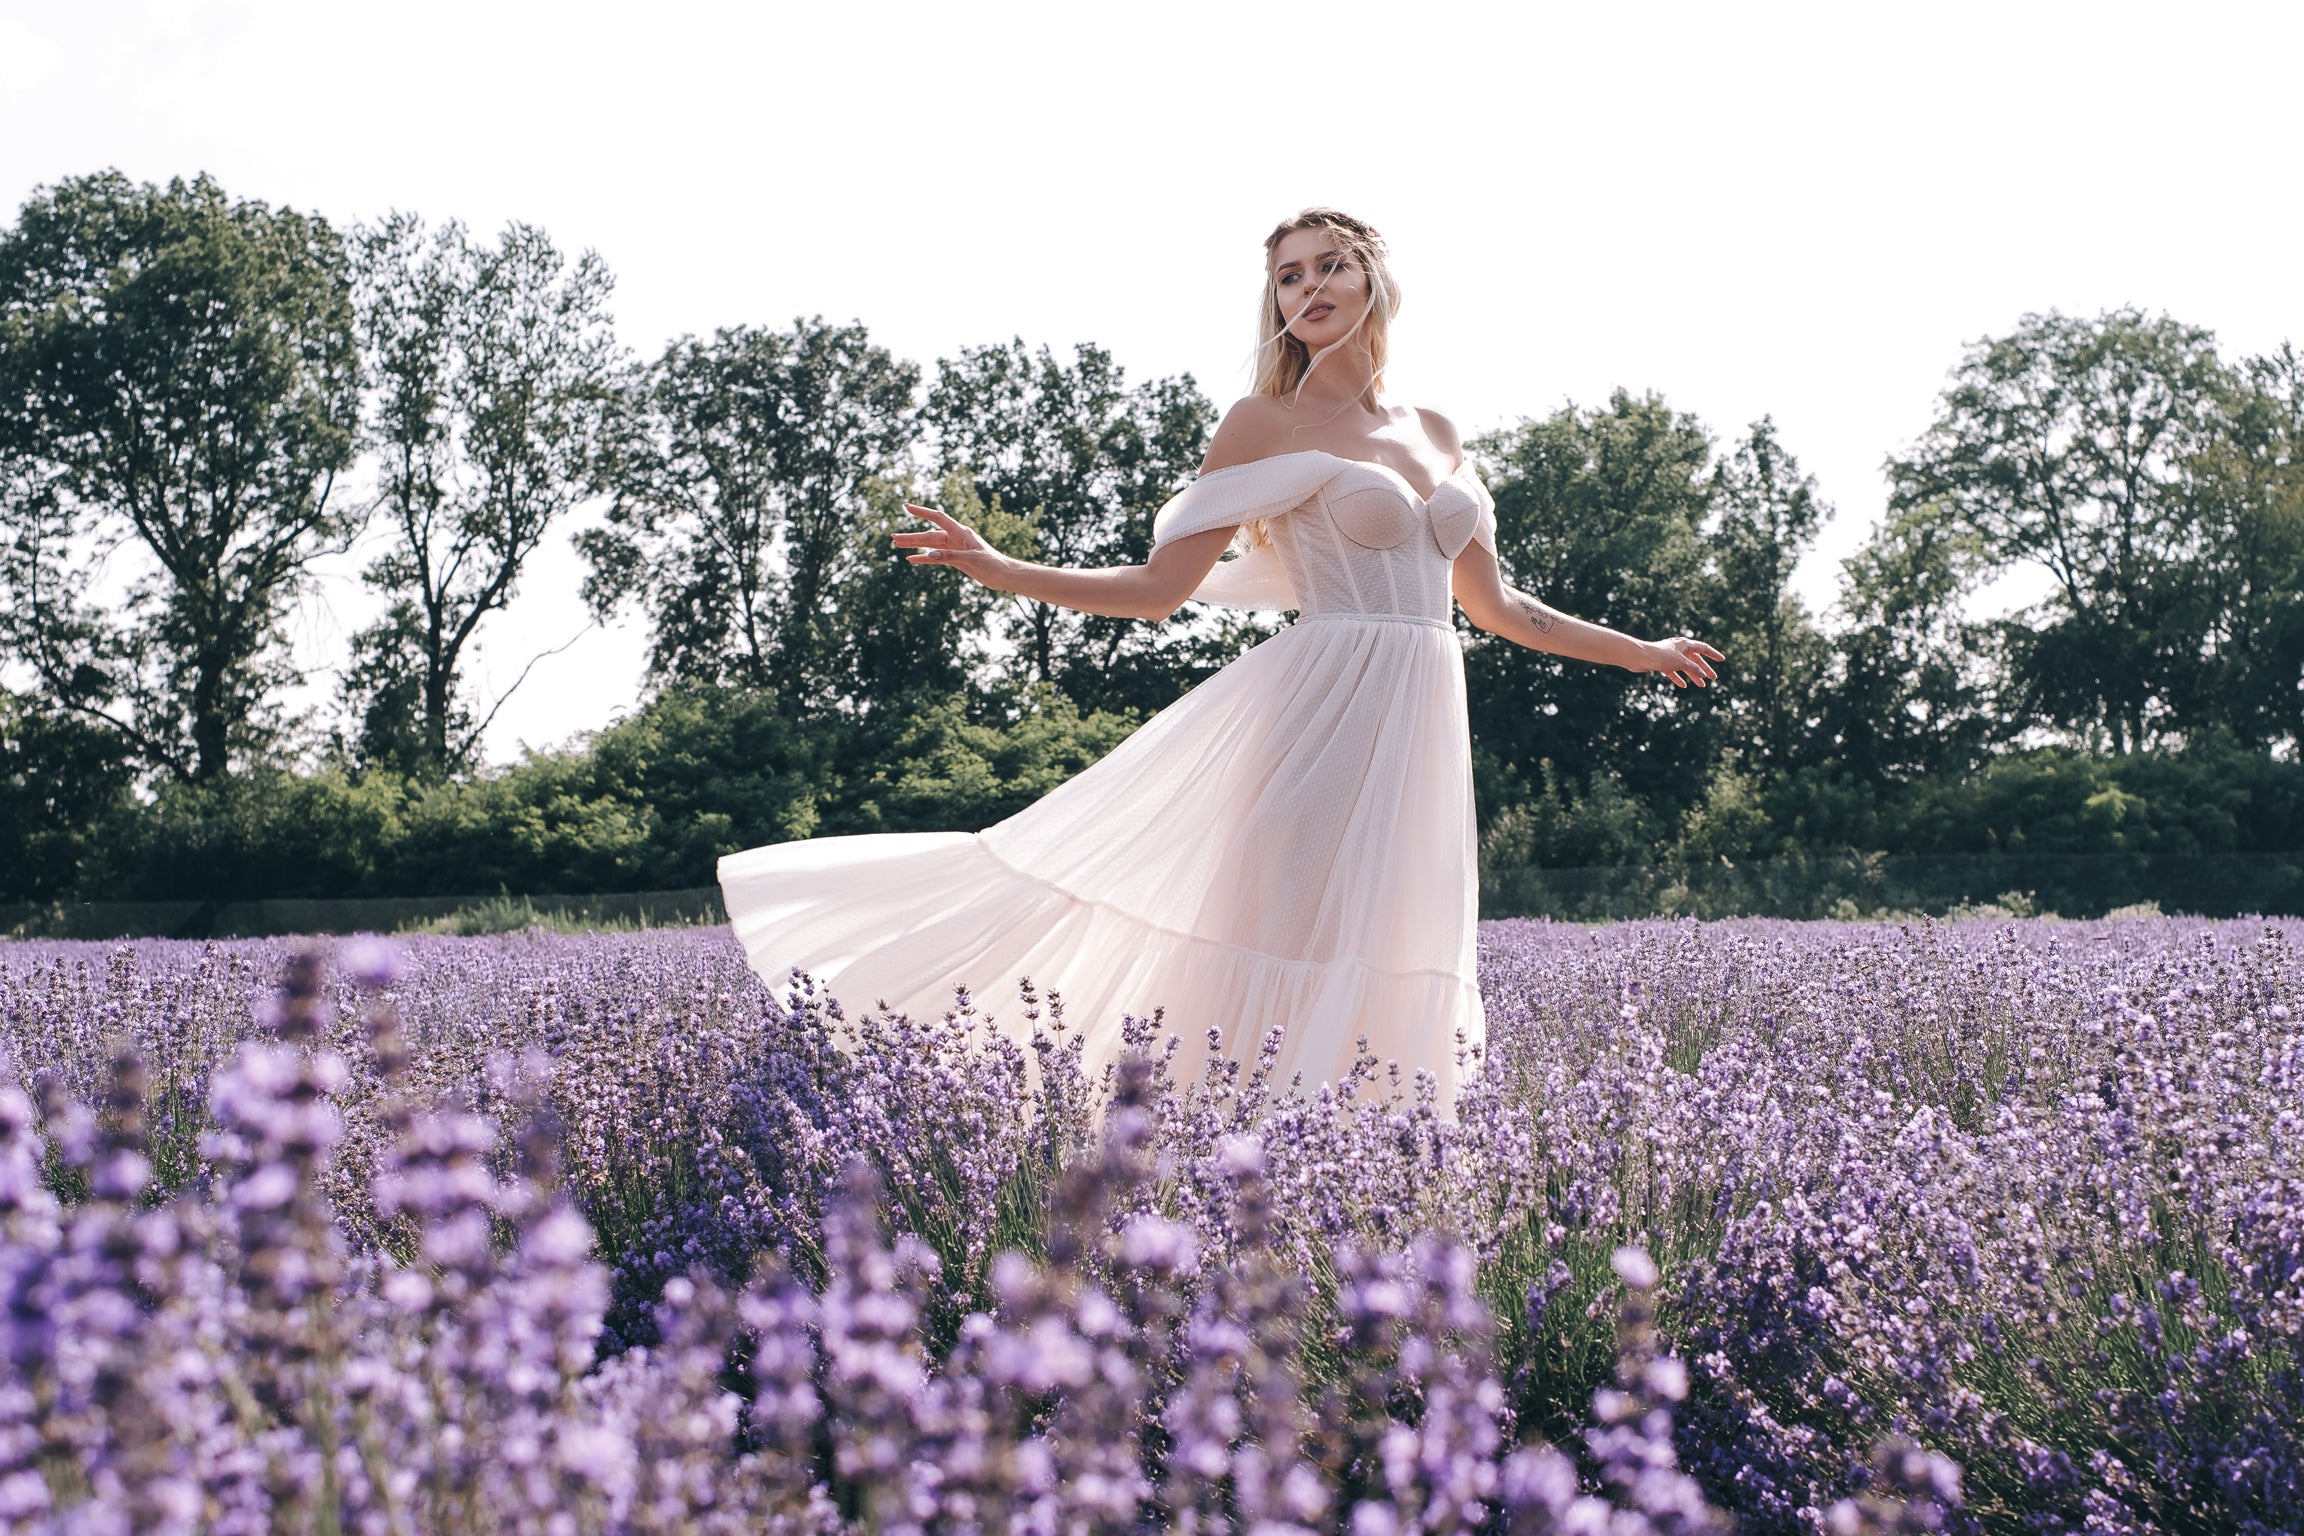 Astrid - Midi Wedding Dress with Off the Shoulder Sleeves - Maxima Bridal